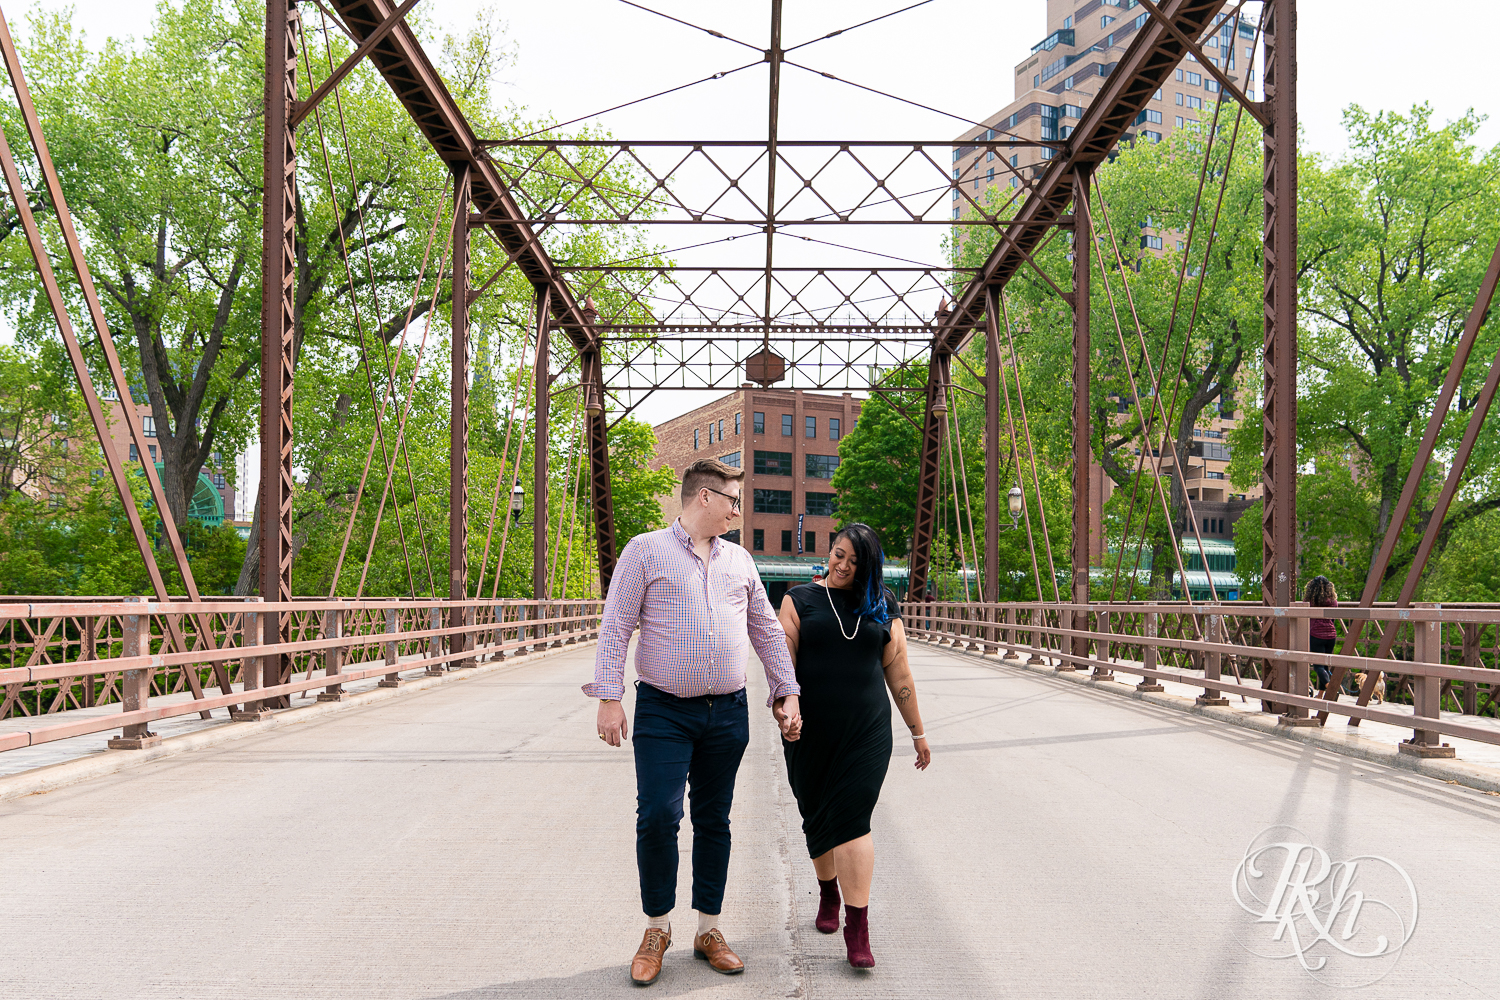 Man and Filipino woman walk across bridge on Nicollet Island in Minneapolis, Minnesota.